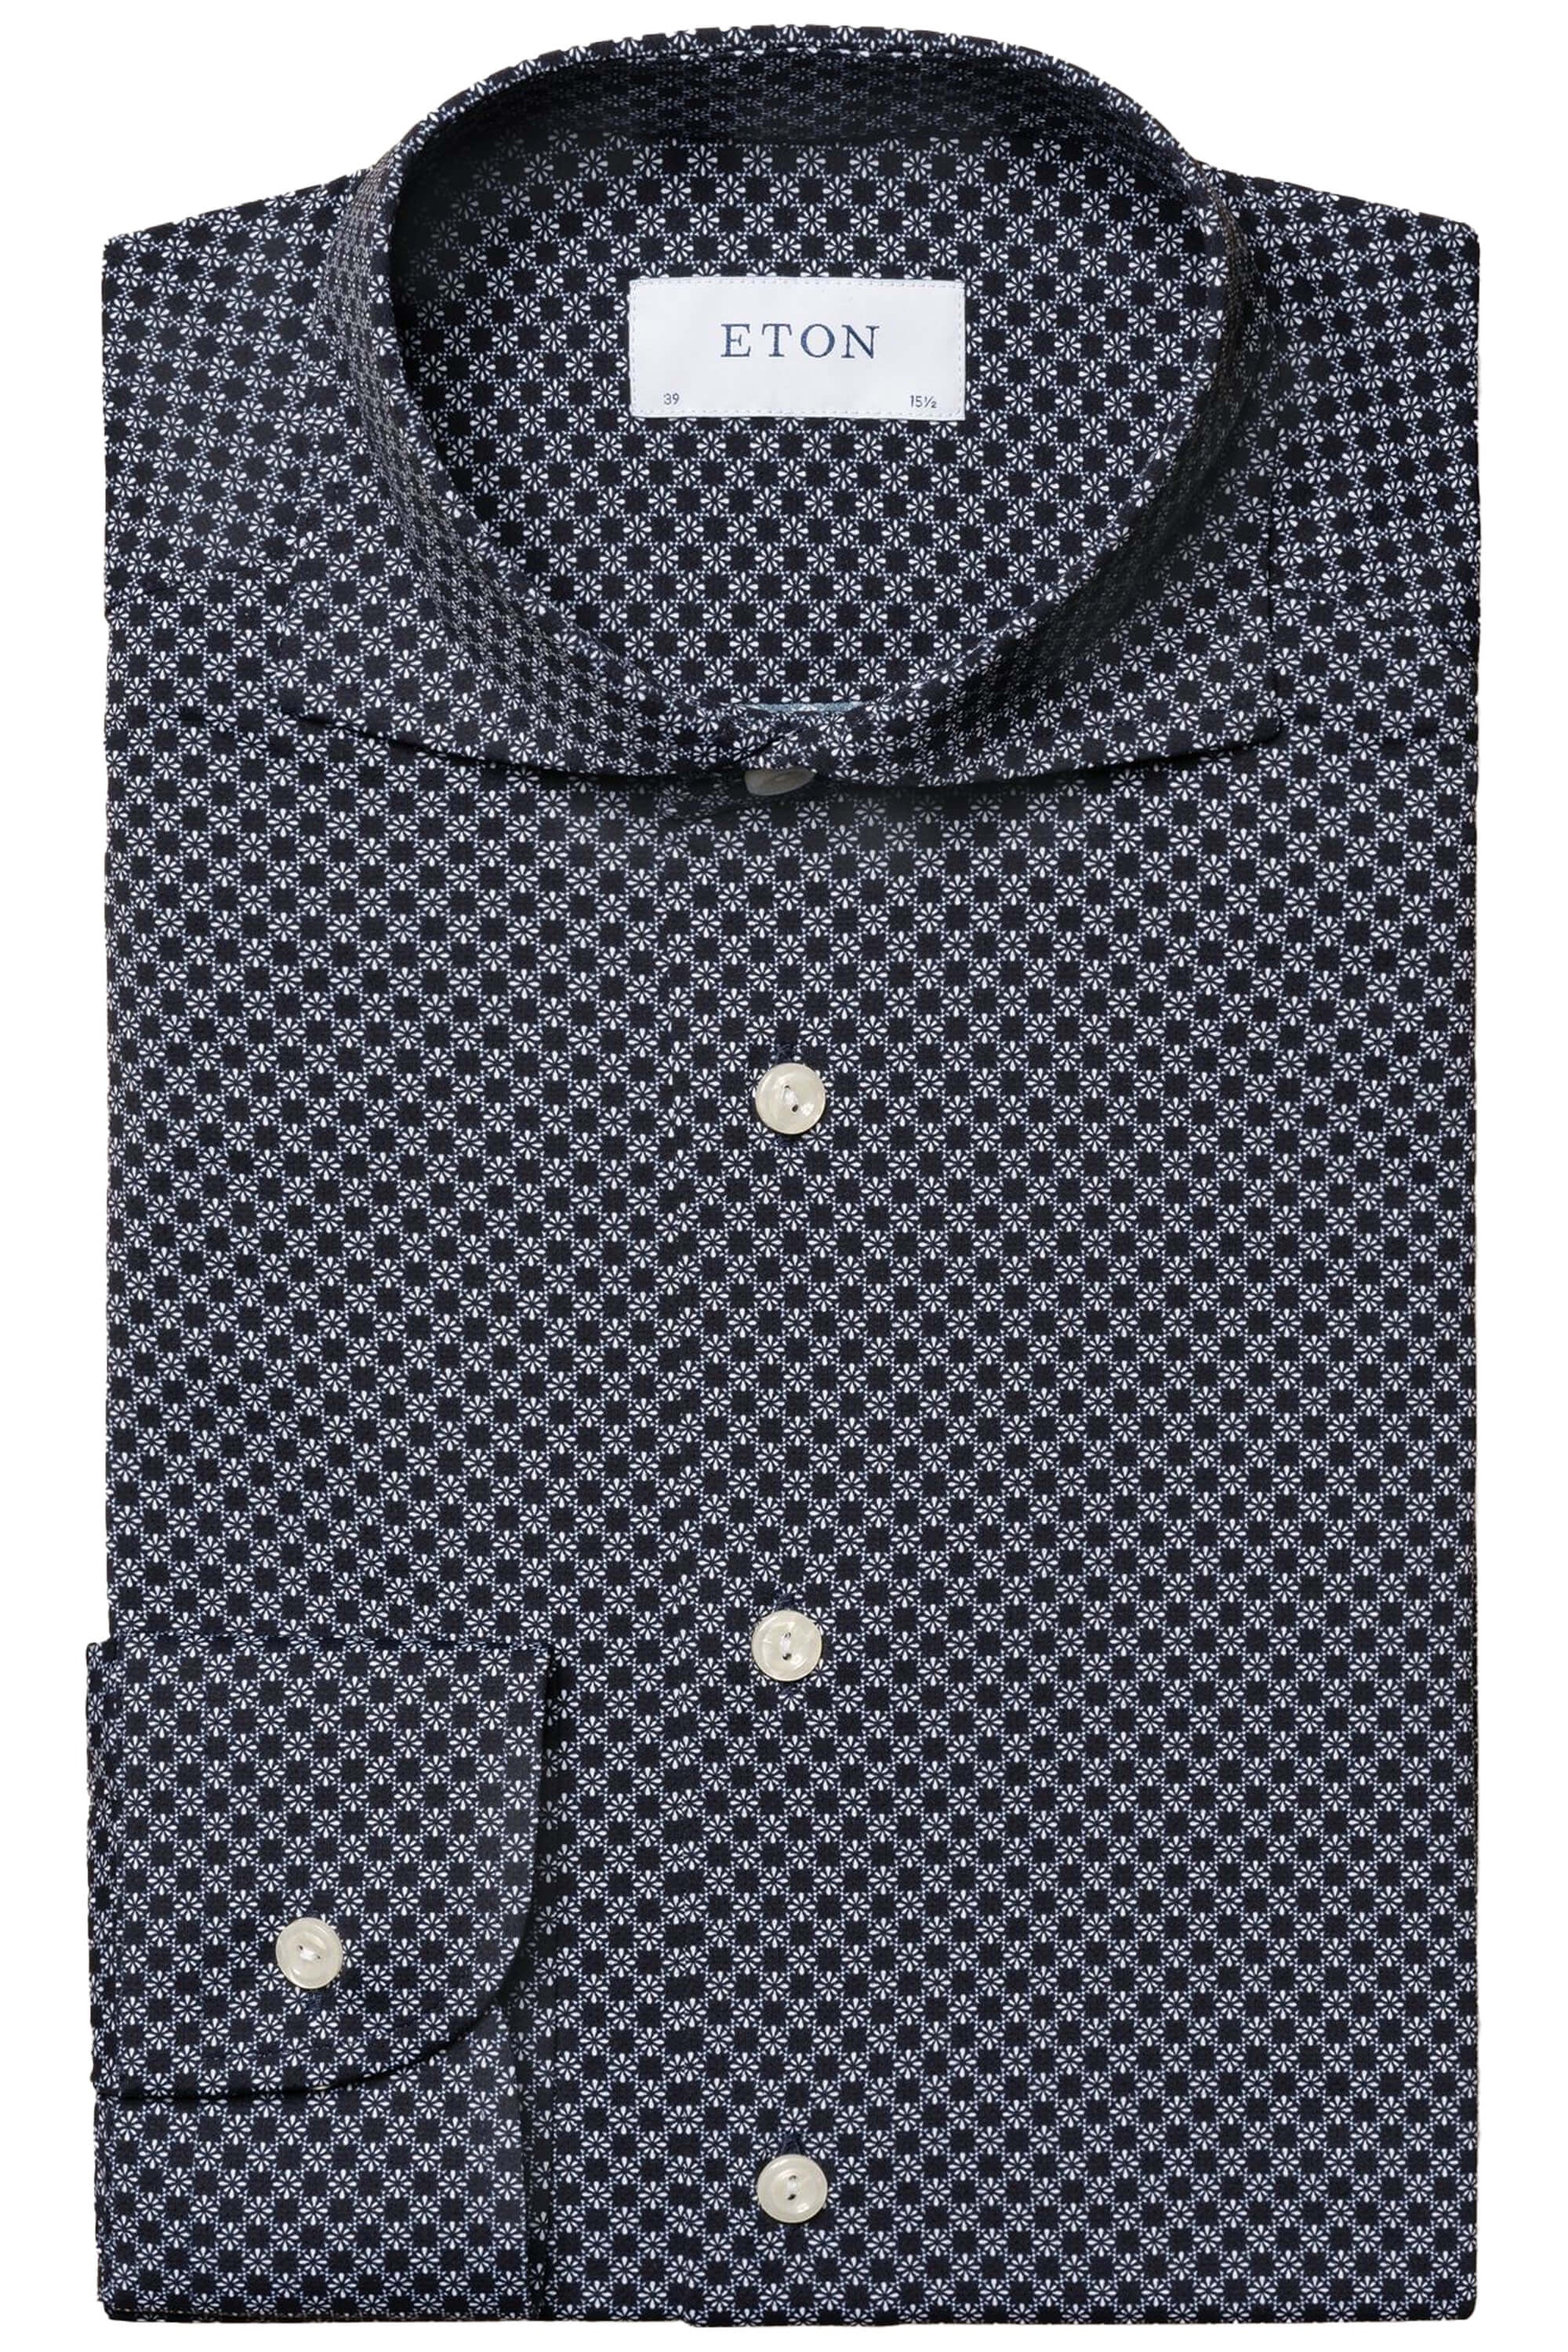 Eton Navy Blue Micro Print Four-Way Stretch Shirt